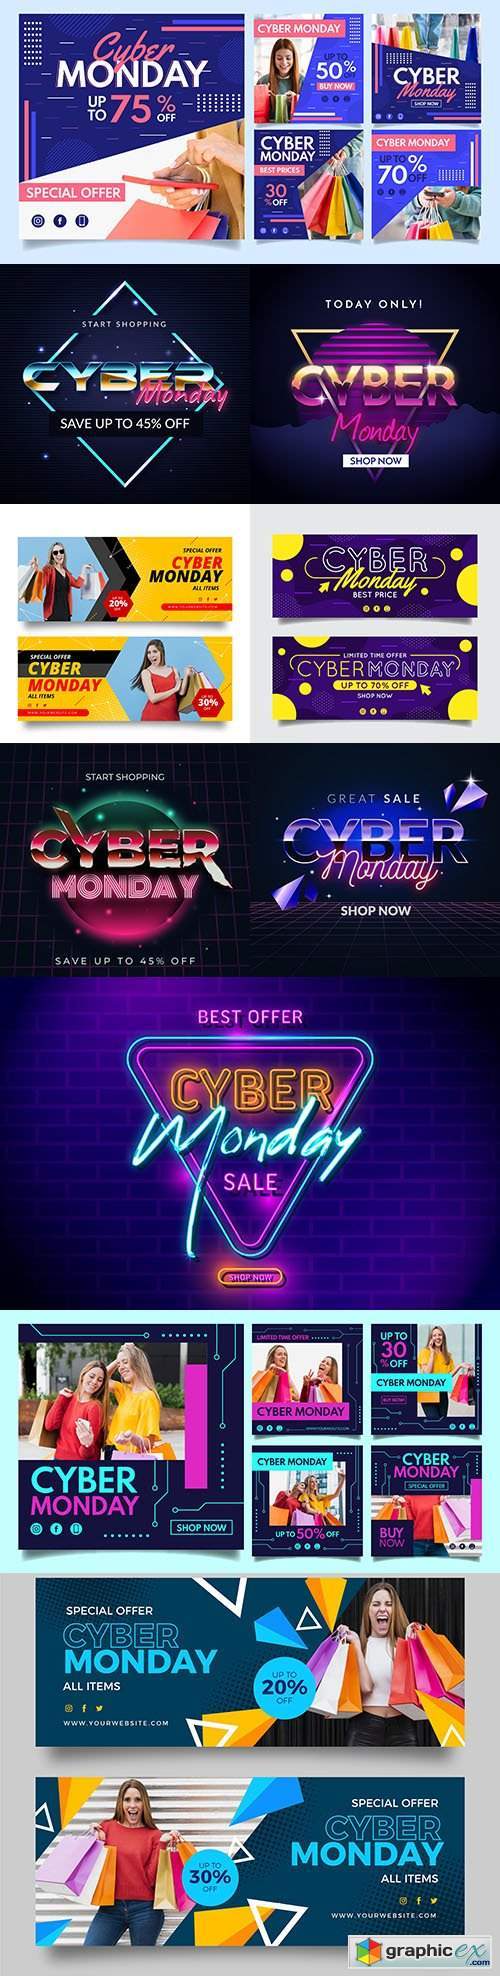 Cyber Monday retro futuristic shopping starts and instagram post